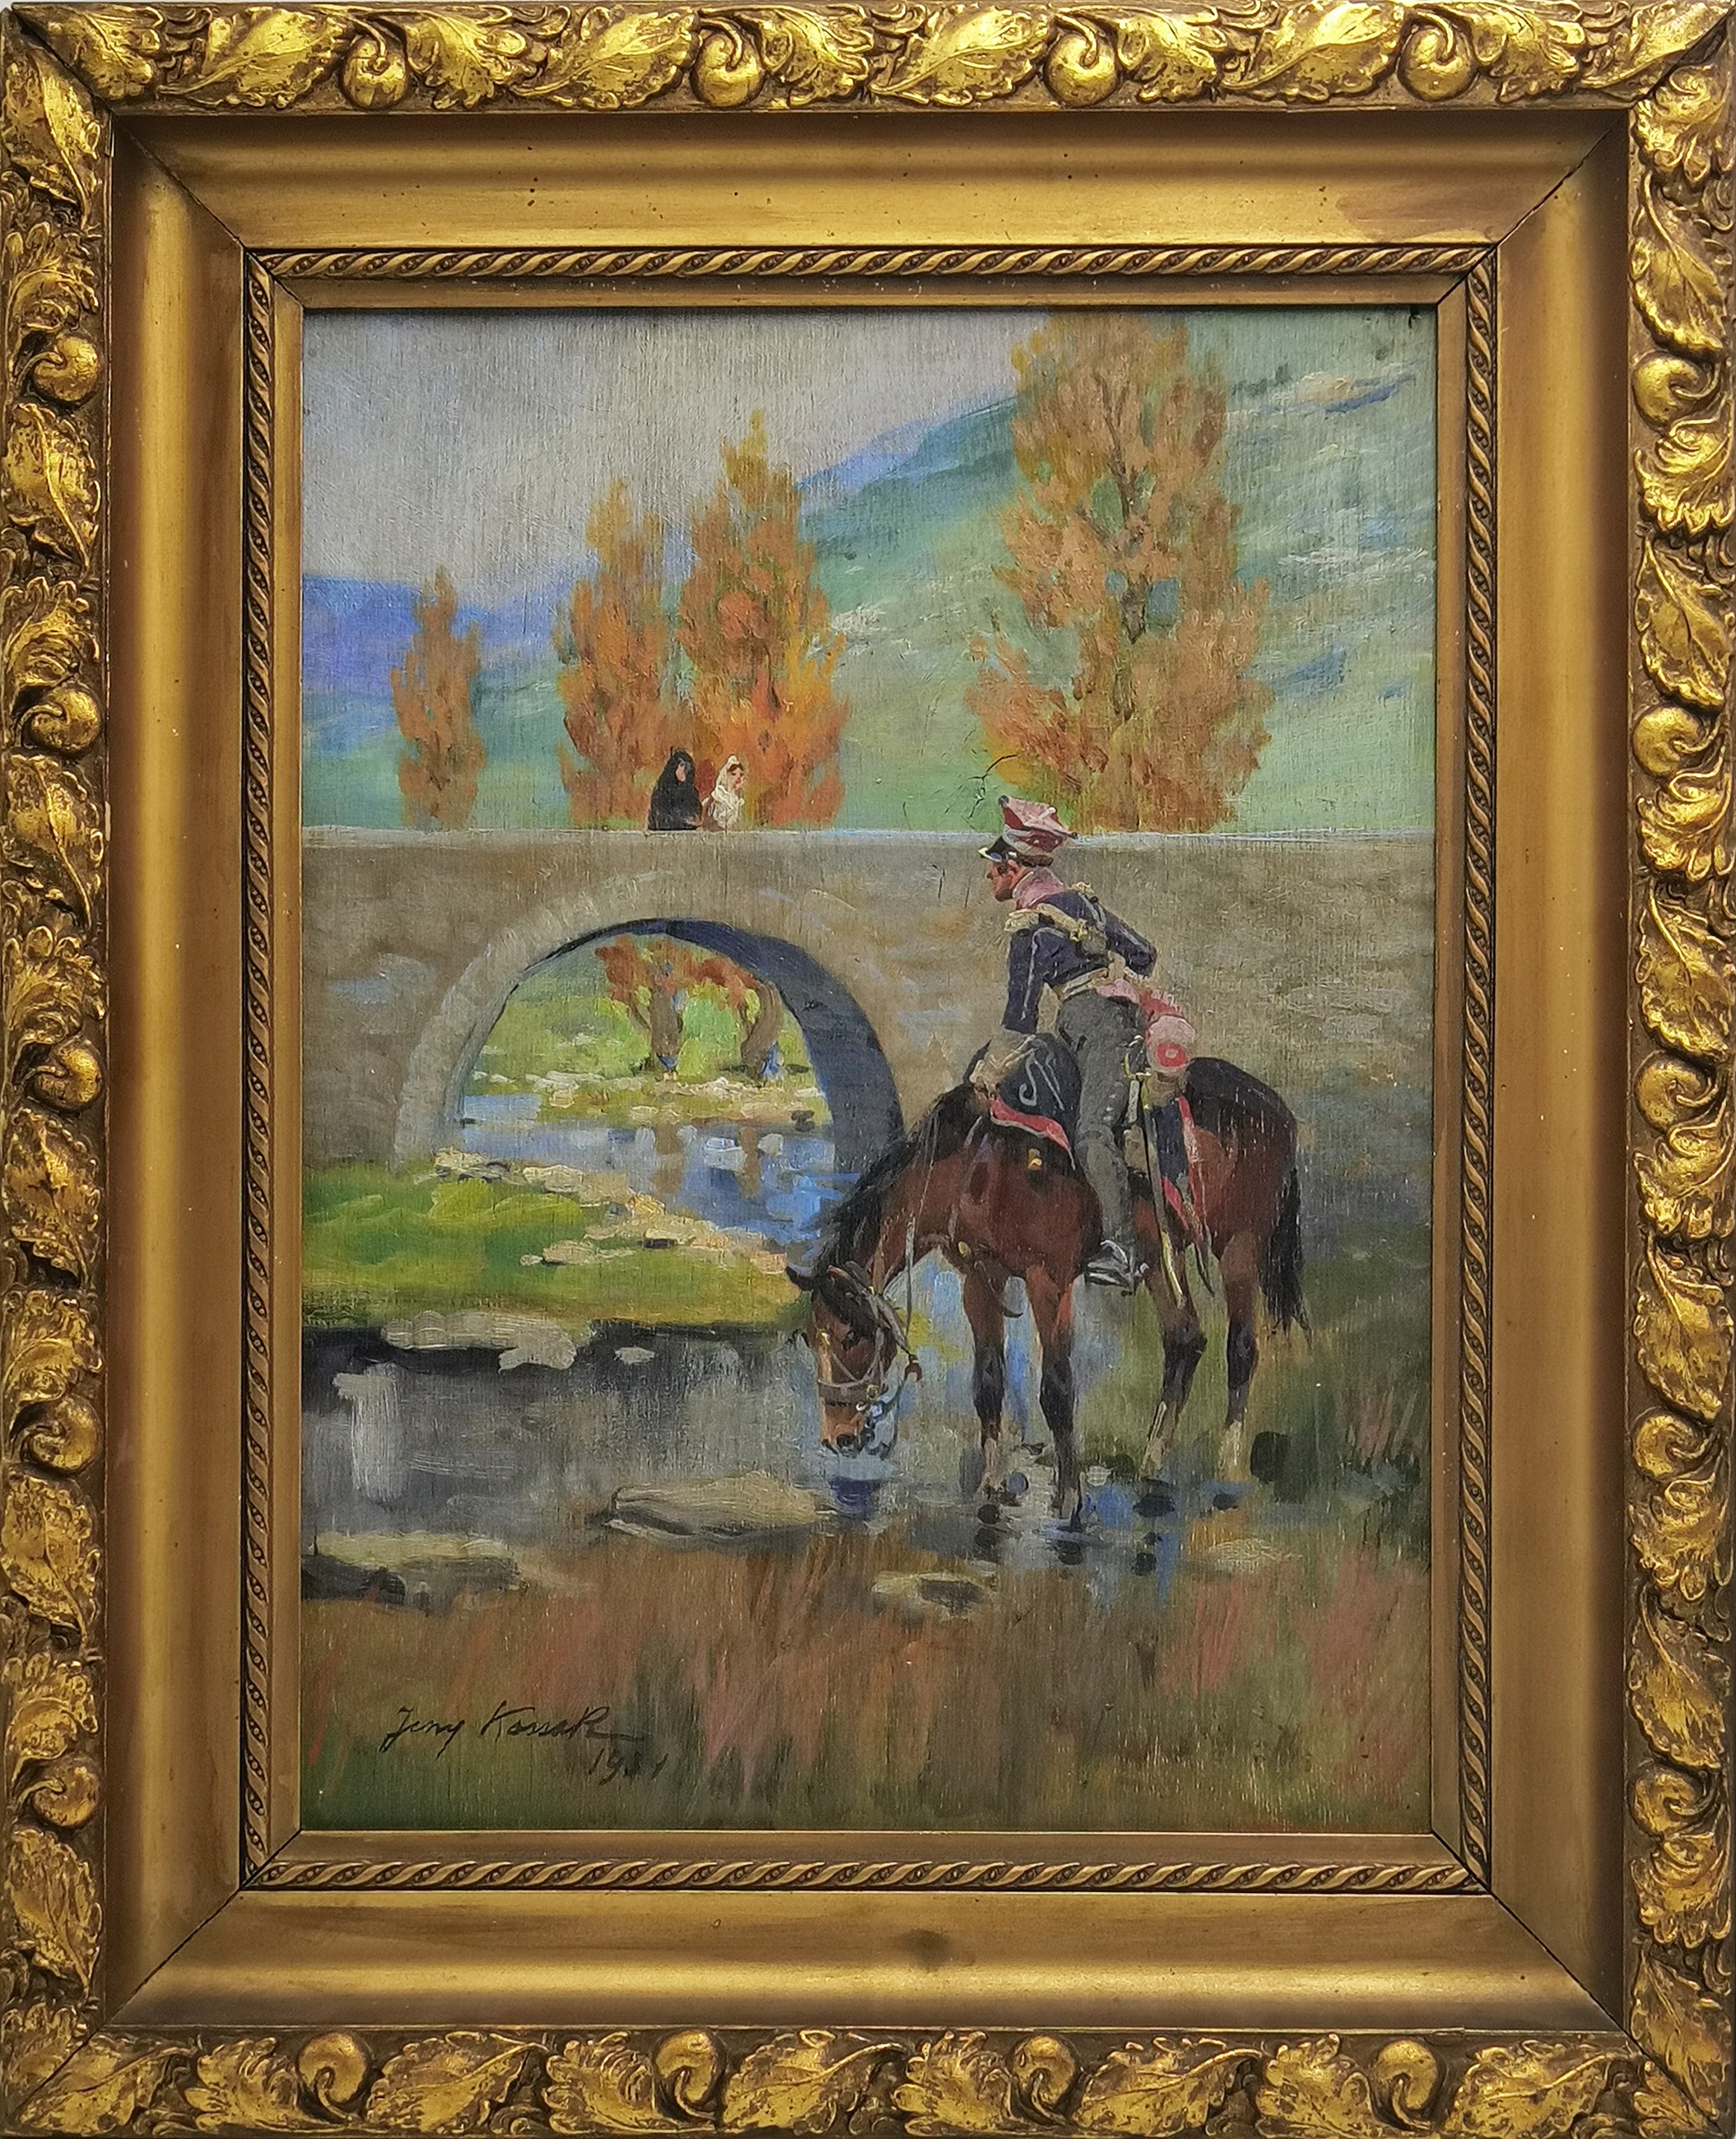 Sold at Auction: Zygmunt Radnicki, Zygmunt Radnicki, watercolour